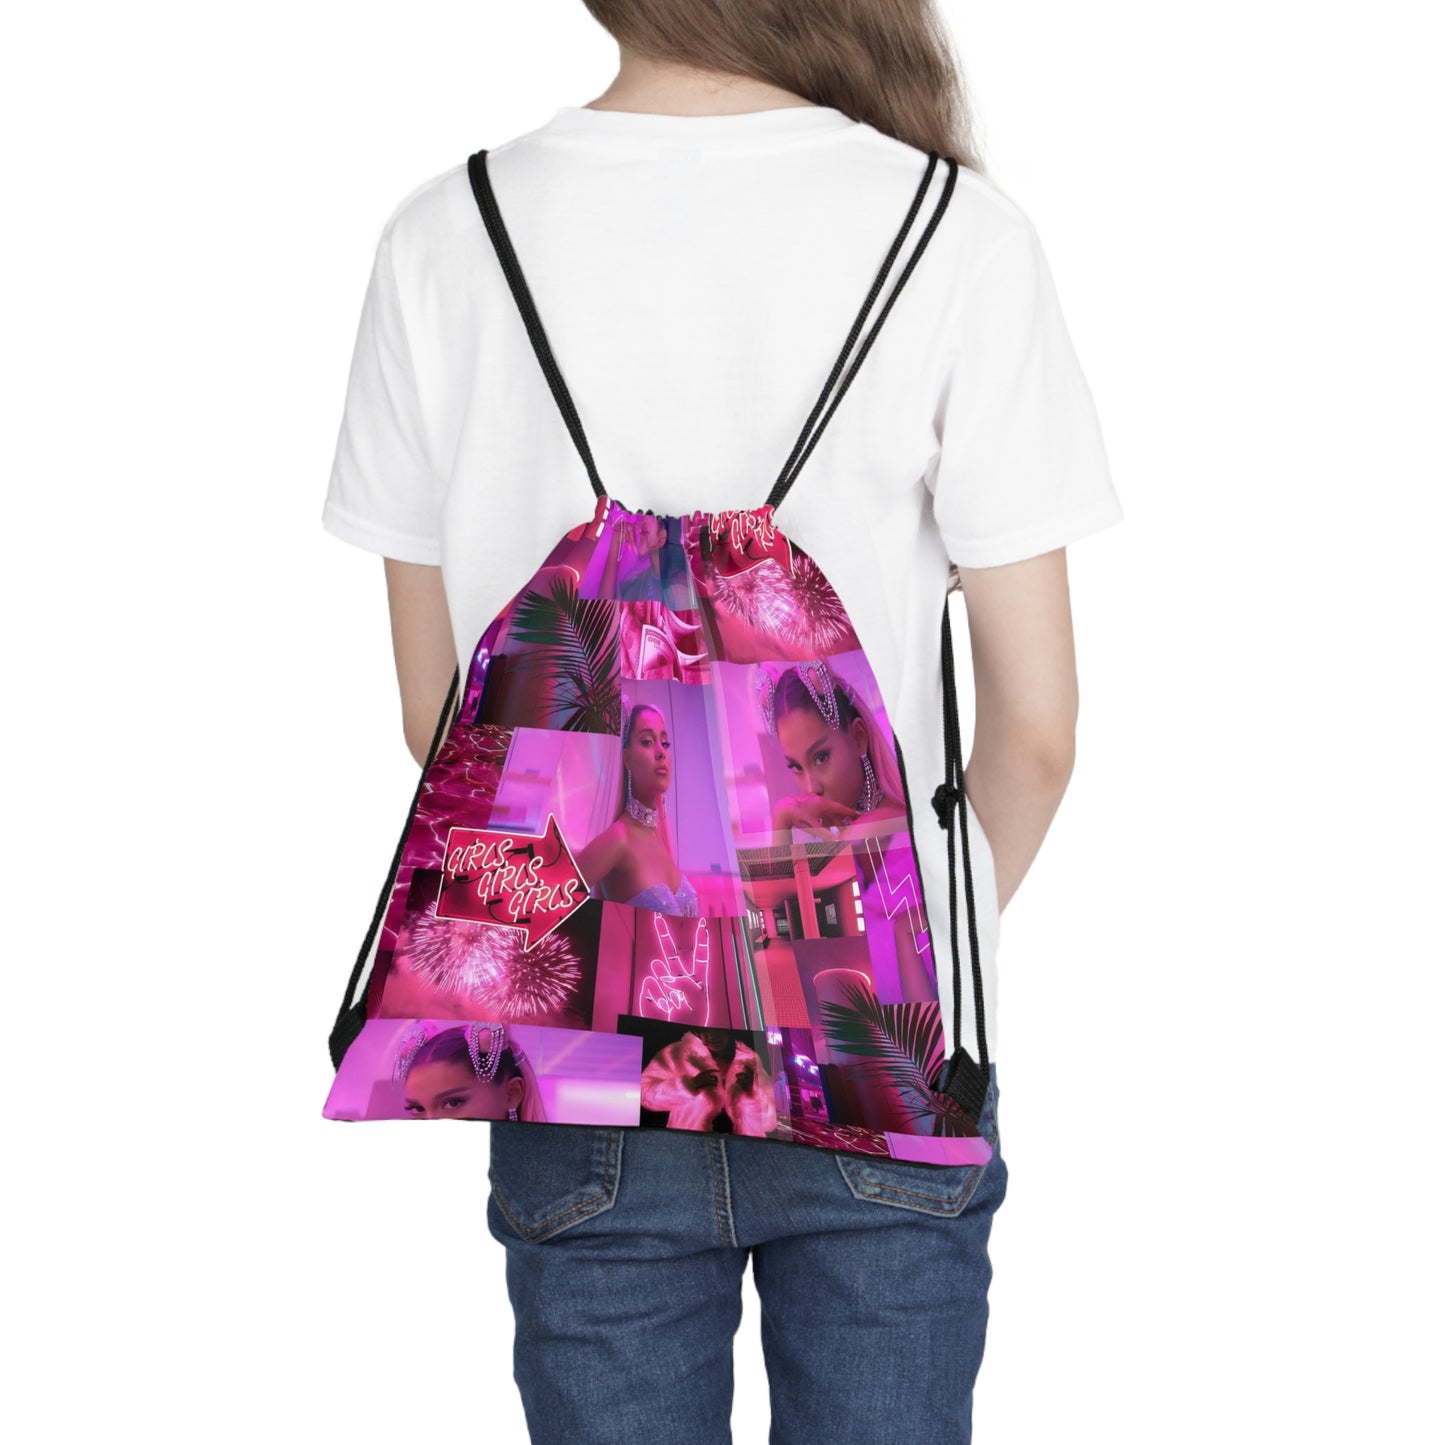 Ariana Grande 7 Rings Collage Outdoor Drawstring Bag